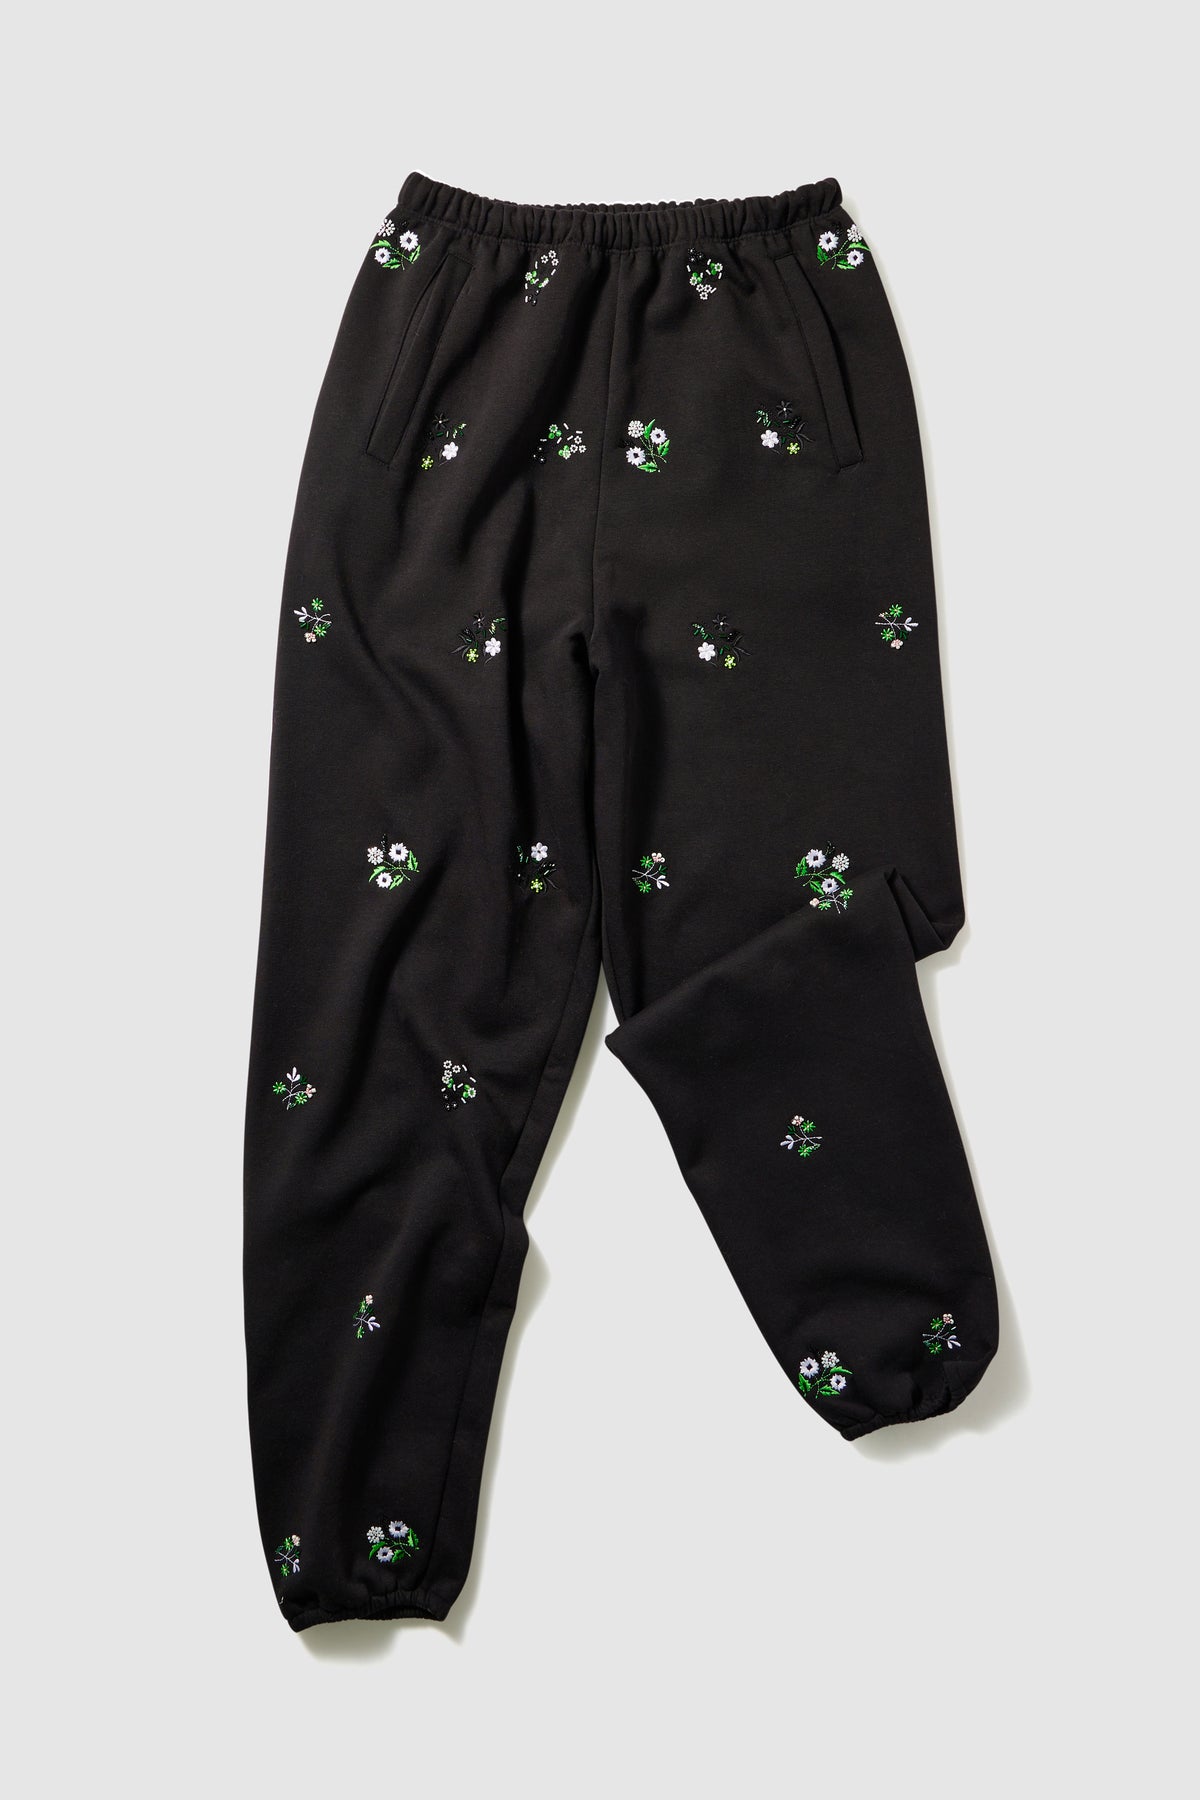 Elliott pants in black beaded embroidered fleece